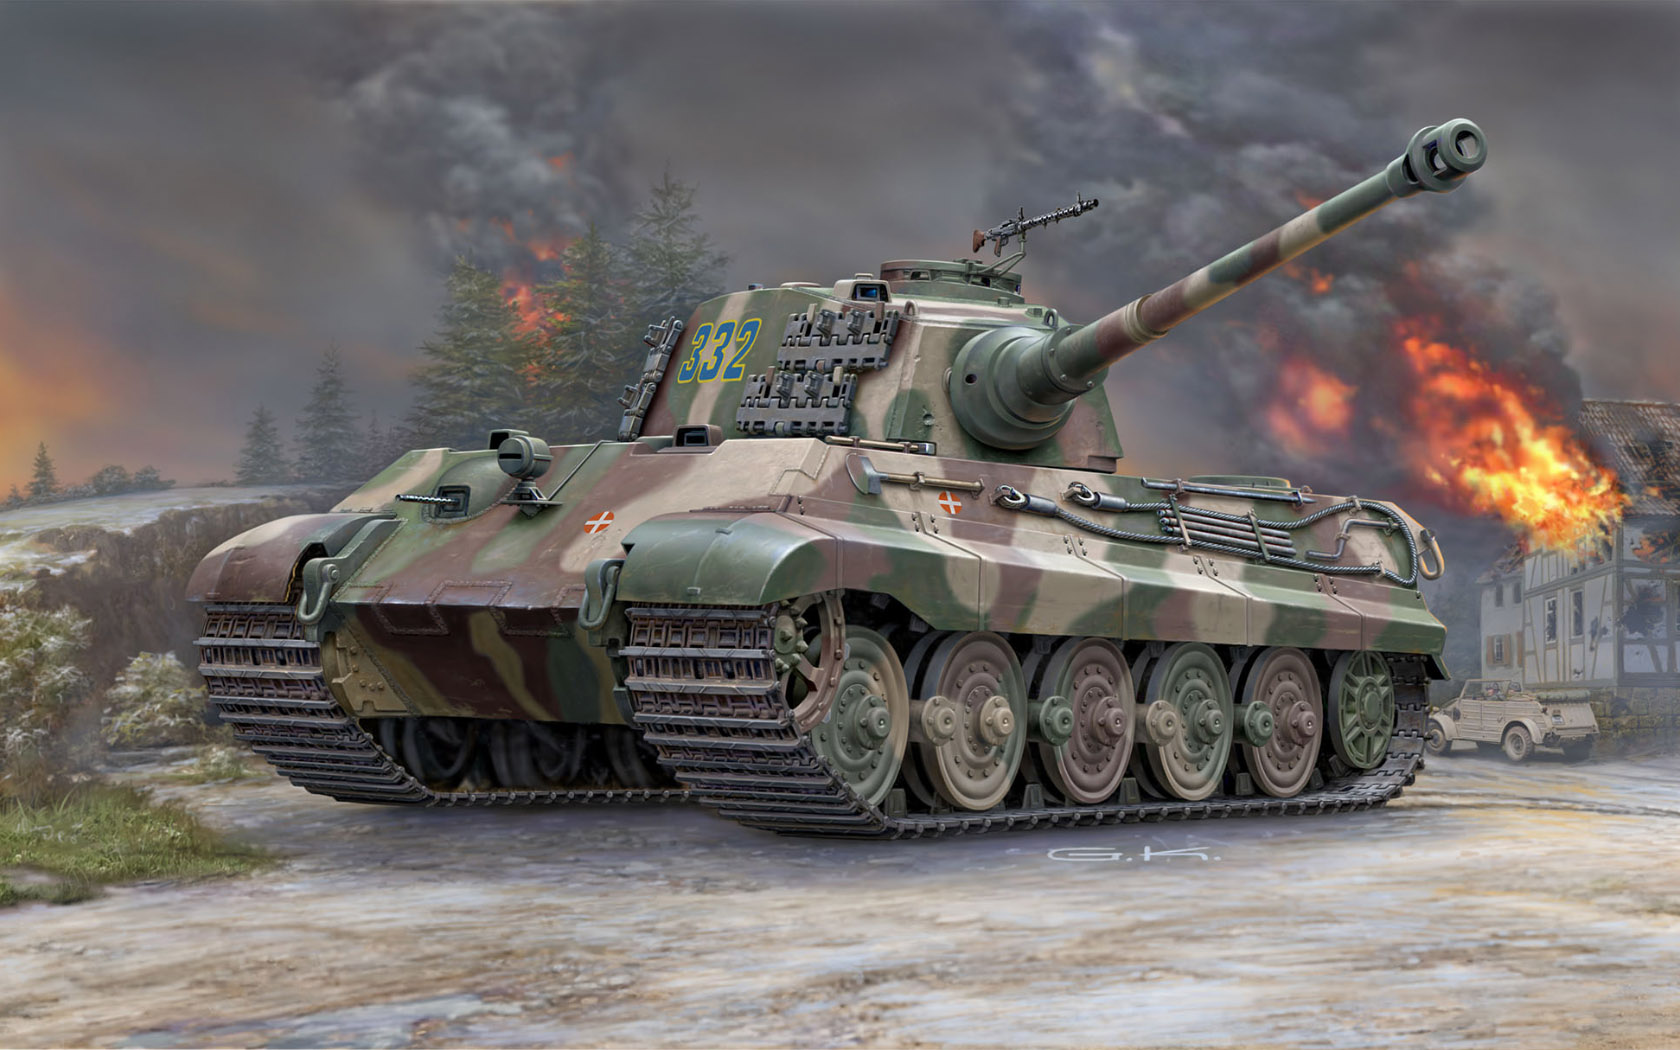 General 1680x1050 tank fire army military Tiger II World War II artwork military vehicle smoke explosion sky